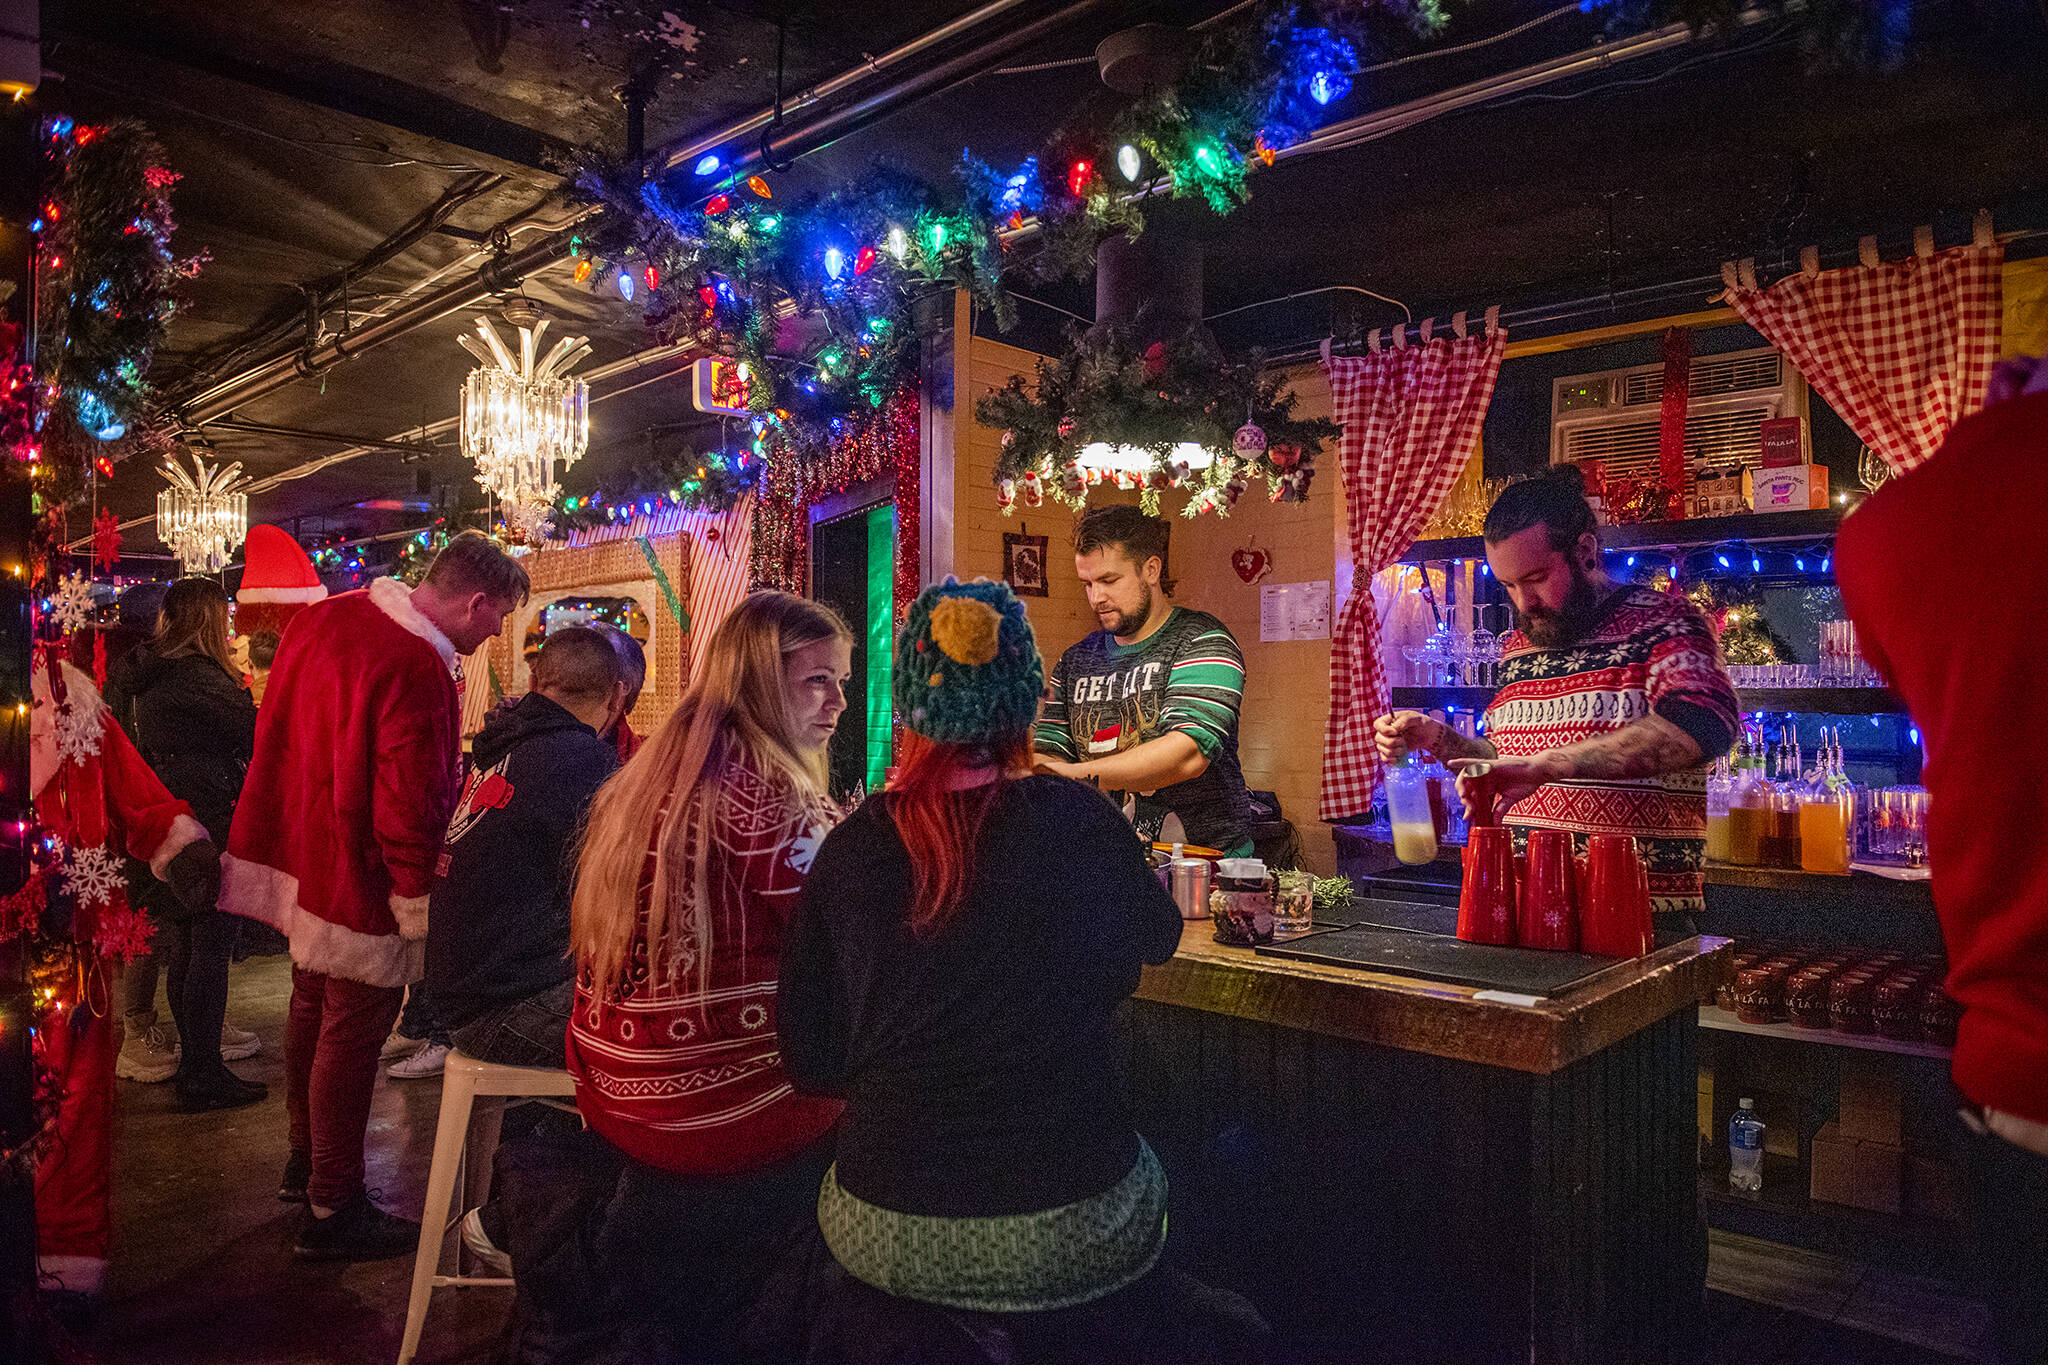 Toronto just got a Christmas themed bar